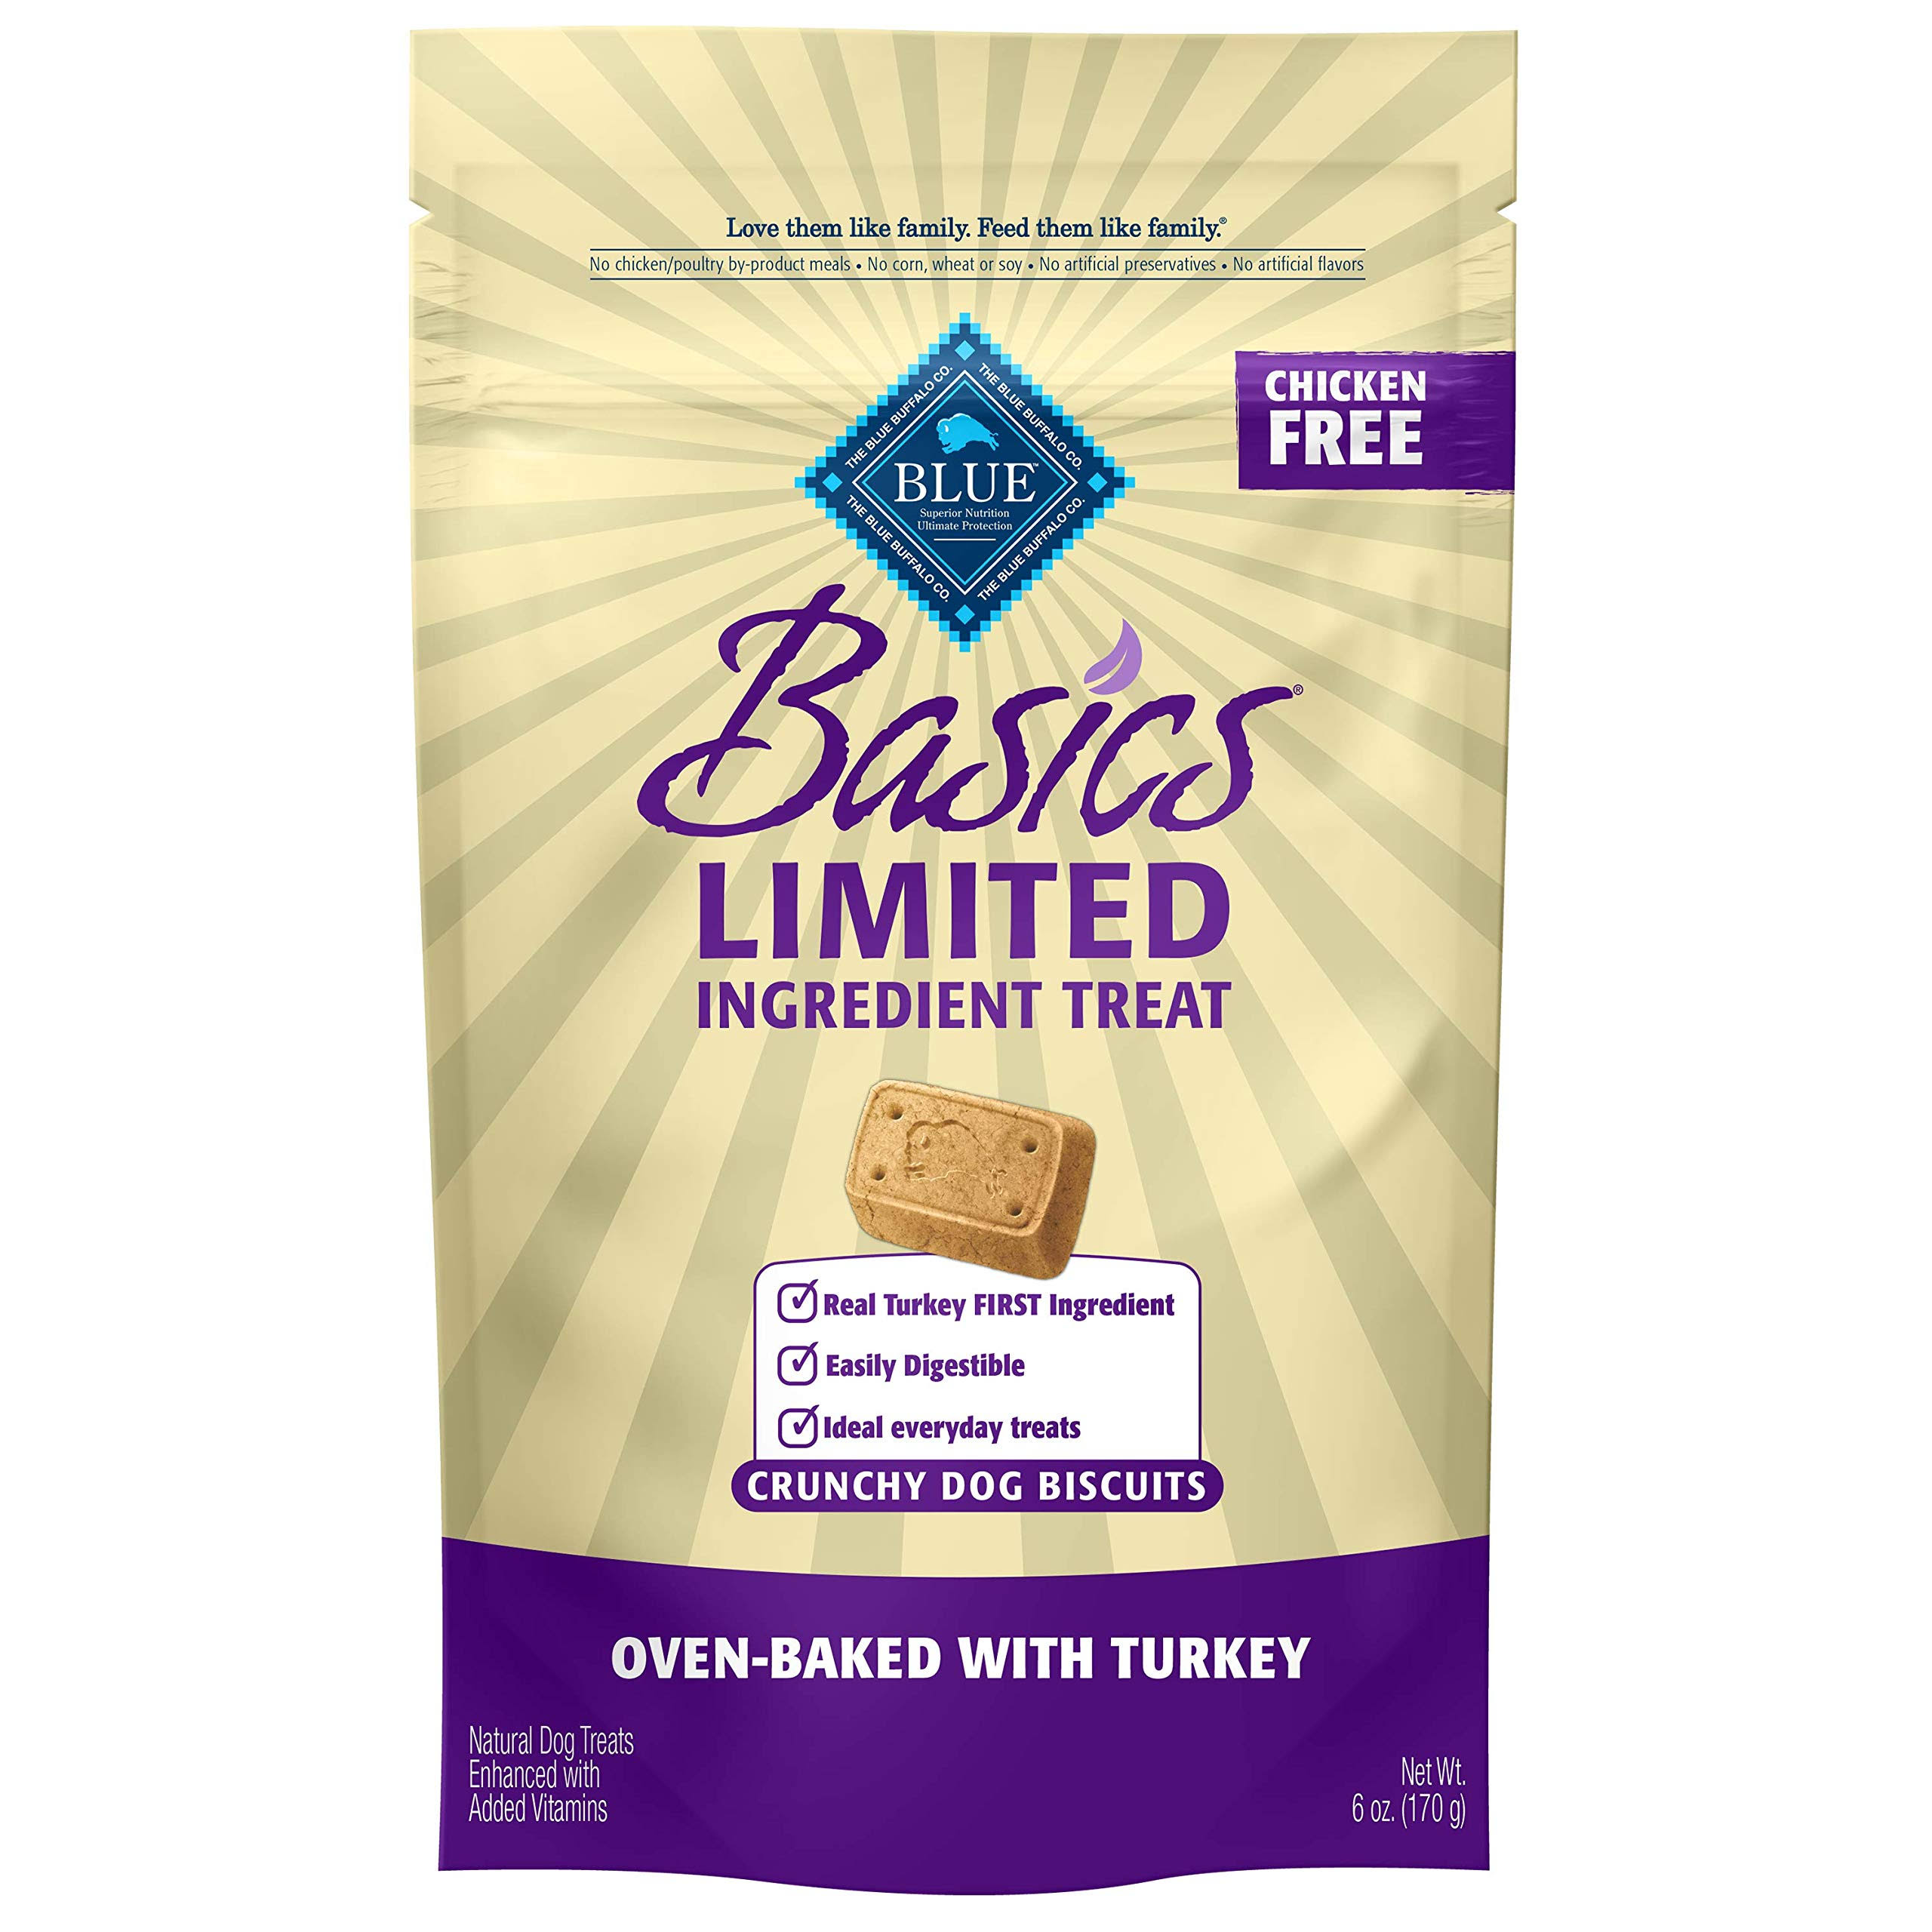 Blue Buffalo Basics Limited Ingredients Dog Biscuits - Turkey and Potato, 6oz